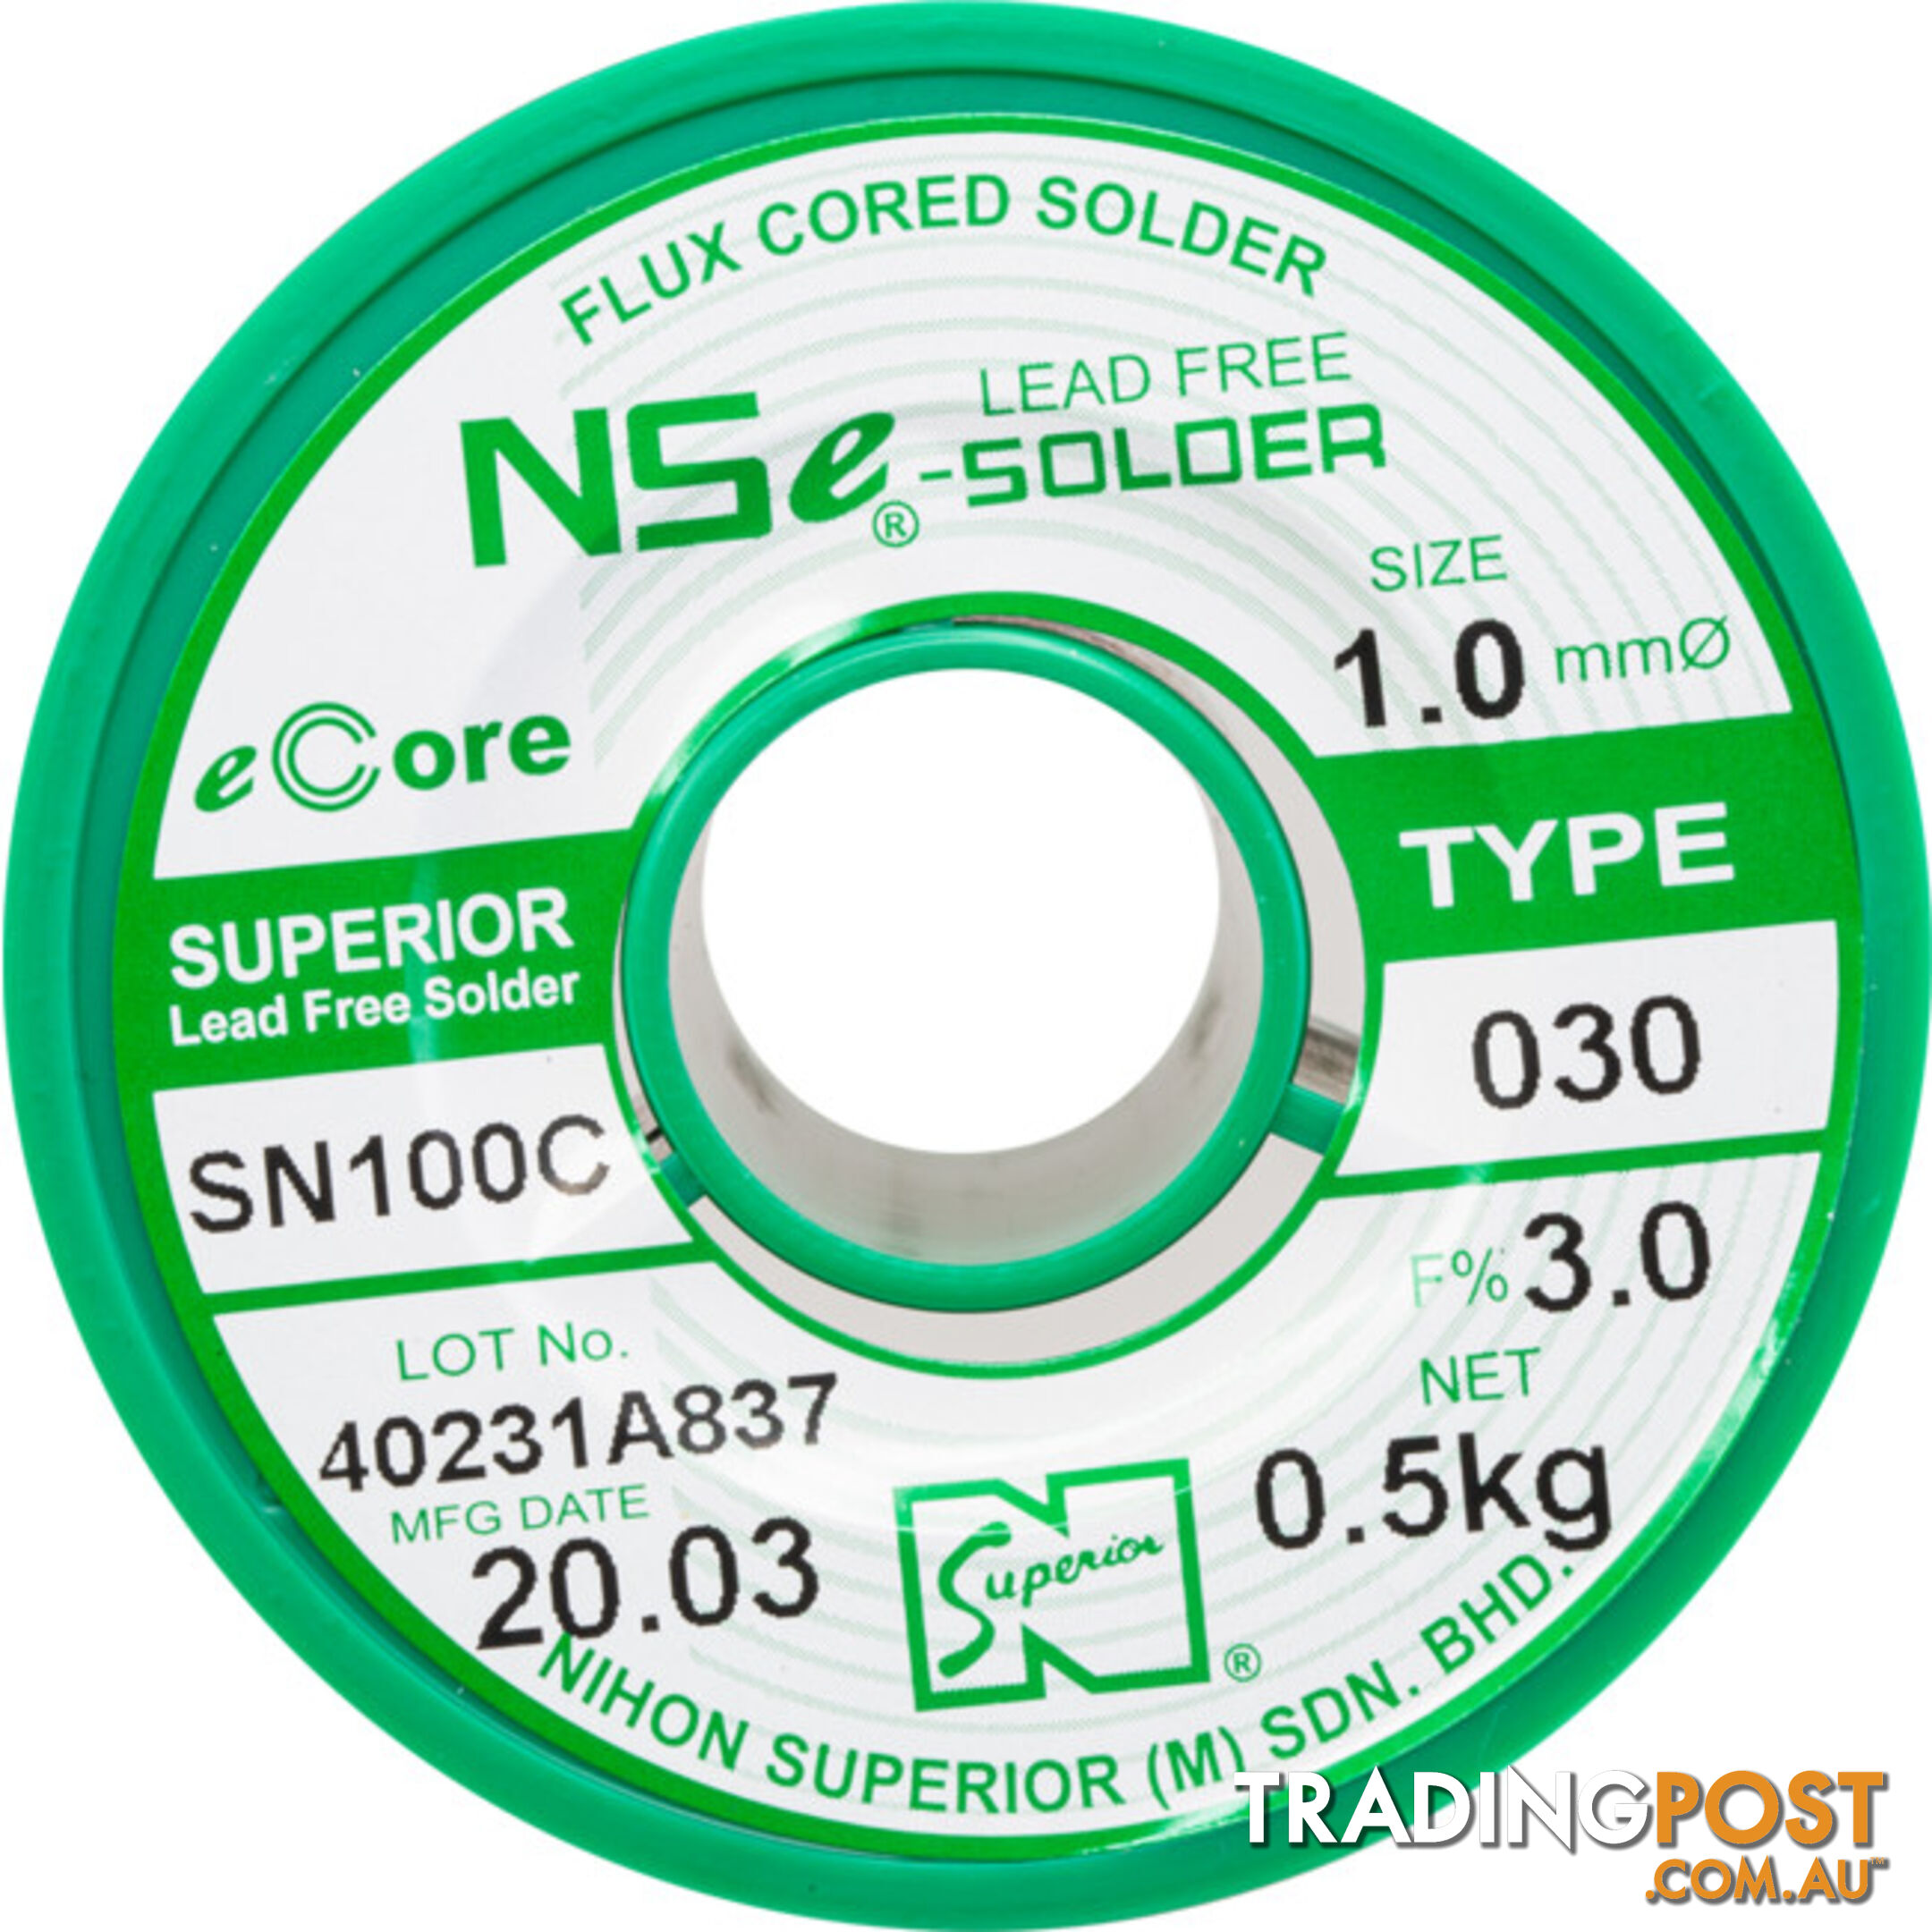 LF1.0SN100C.5K 1.0MM LEAD FREE SOLDER 500G NIHON SUPERIOR SN100C